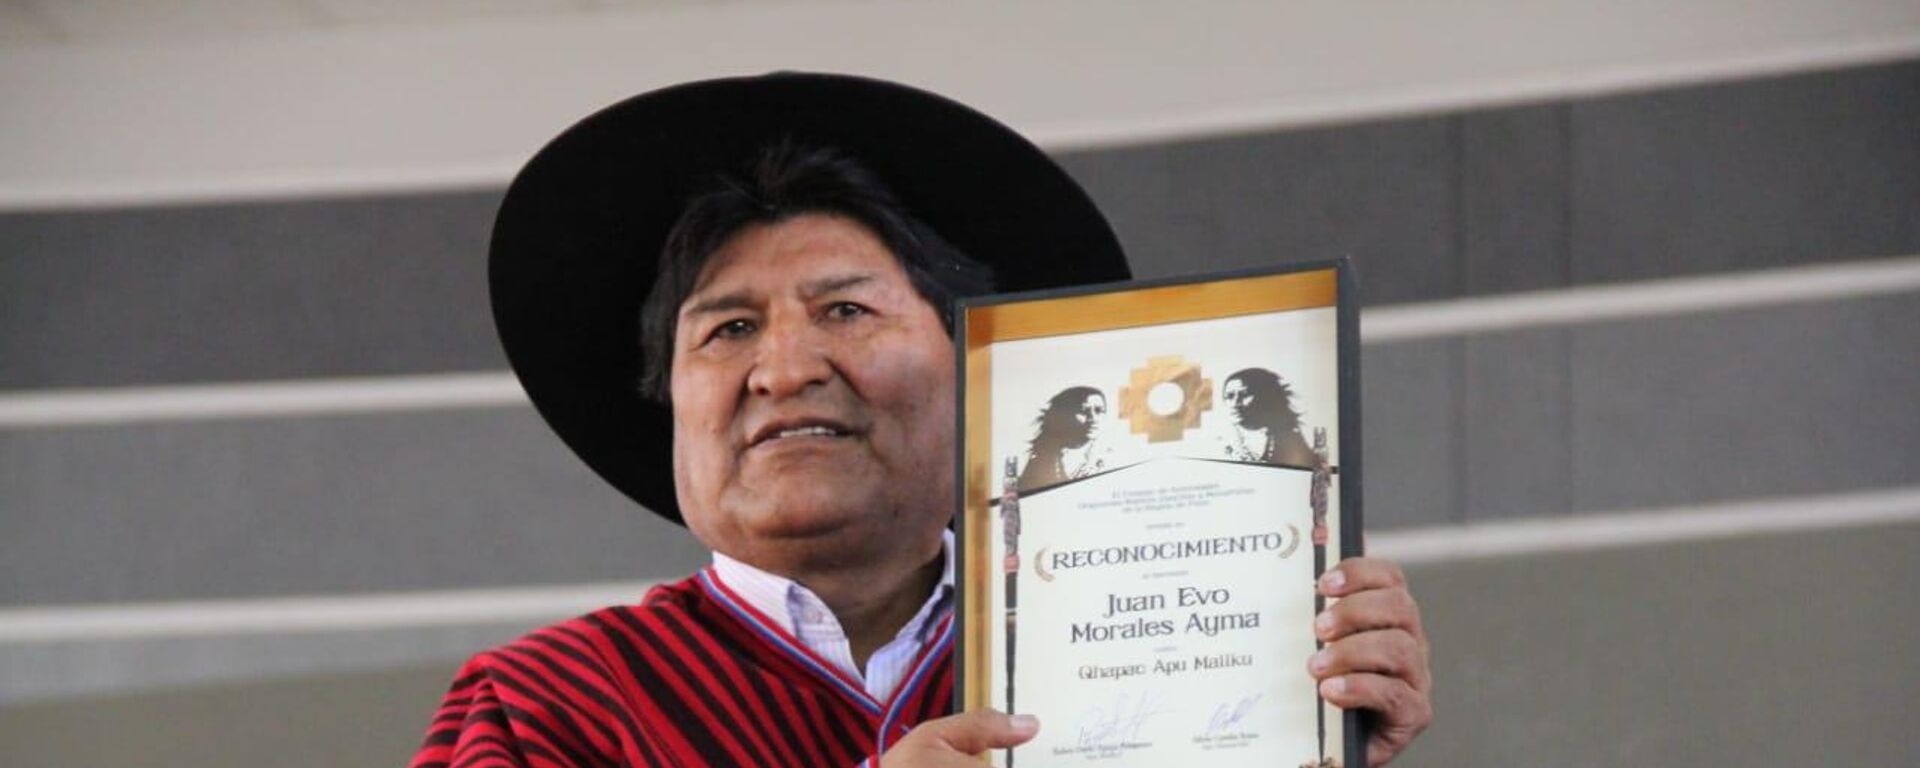 Evo Morales recibe su doctorado honoris causa en Puno, Perú - Sputnik Mundo, 1920, 24.11.2022